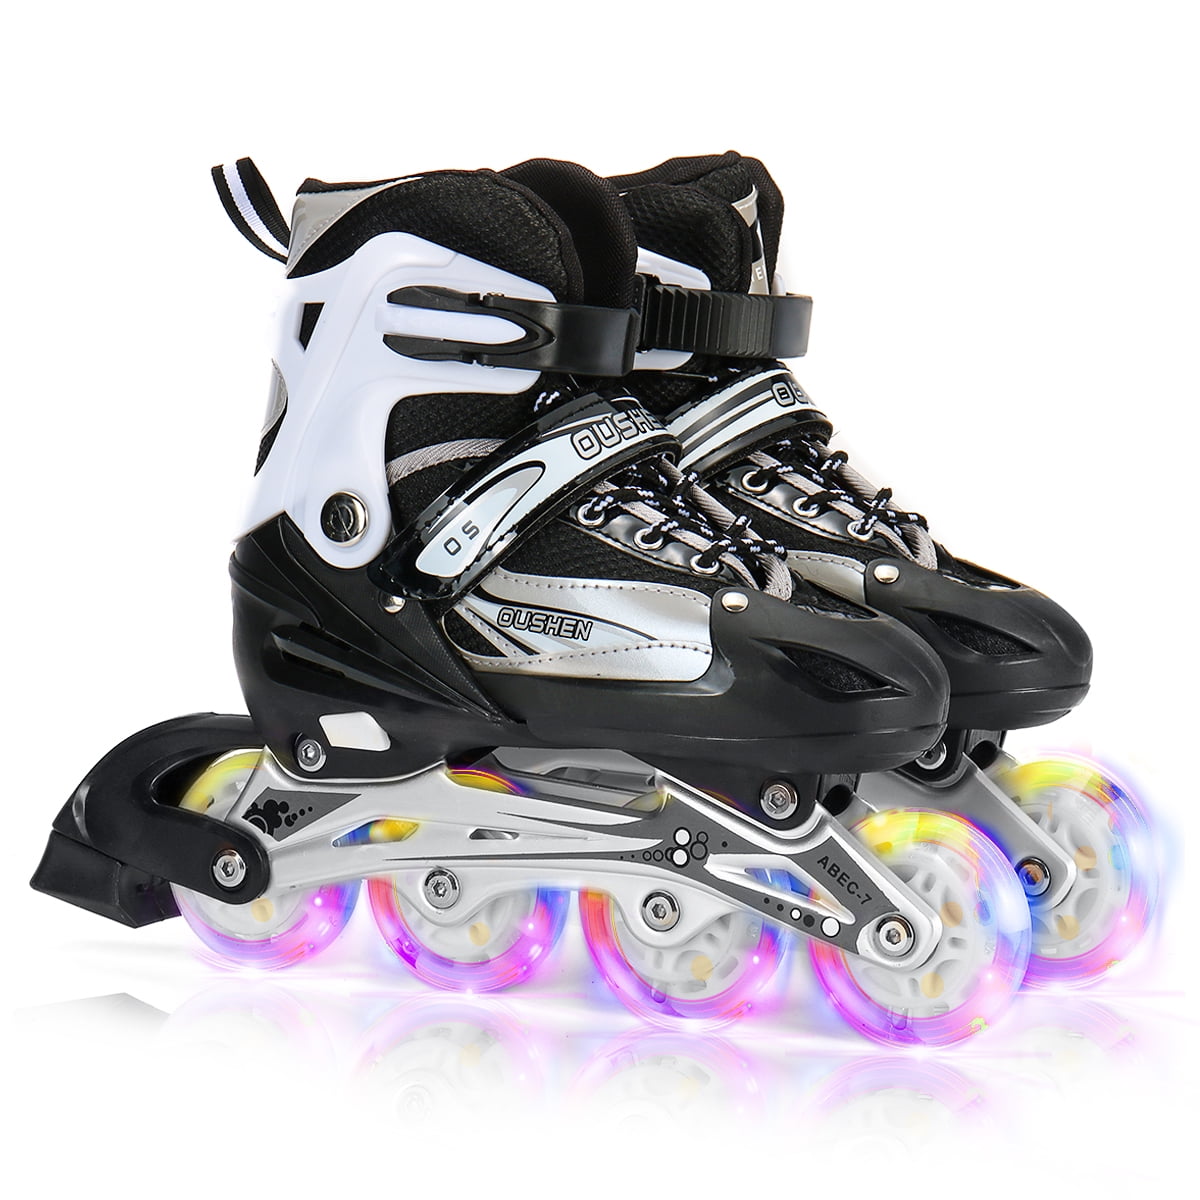 Adjustable Inline safe Skates Rollerblades Kids gift Llluminating Wheel Size S&M 